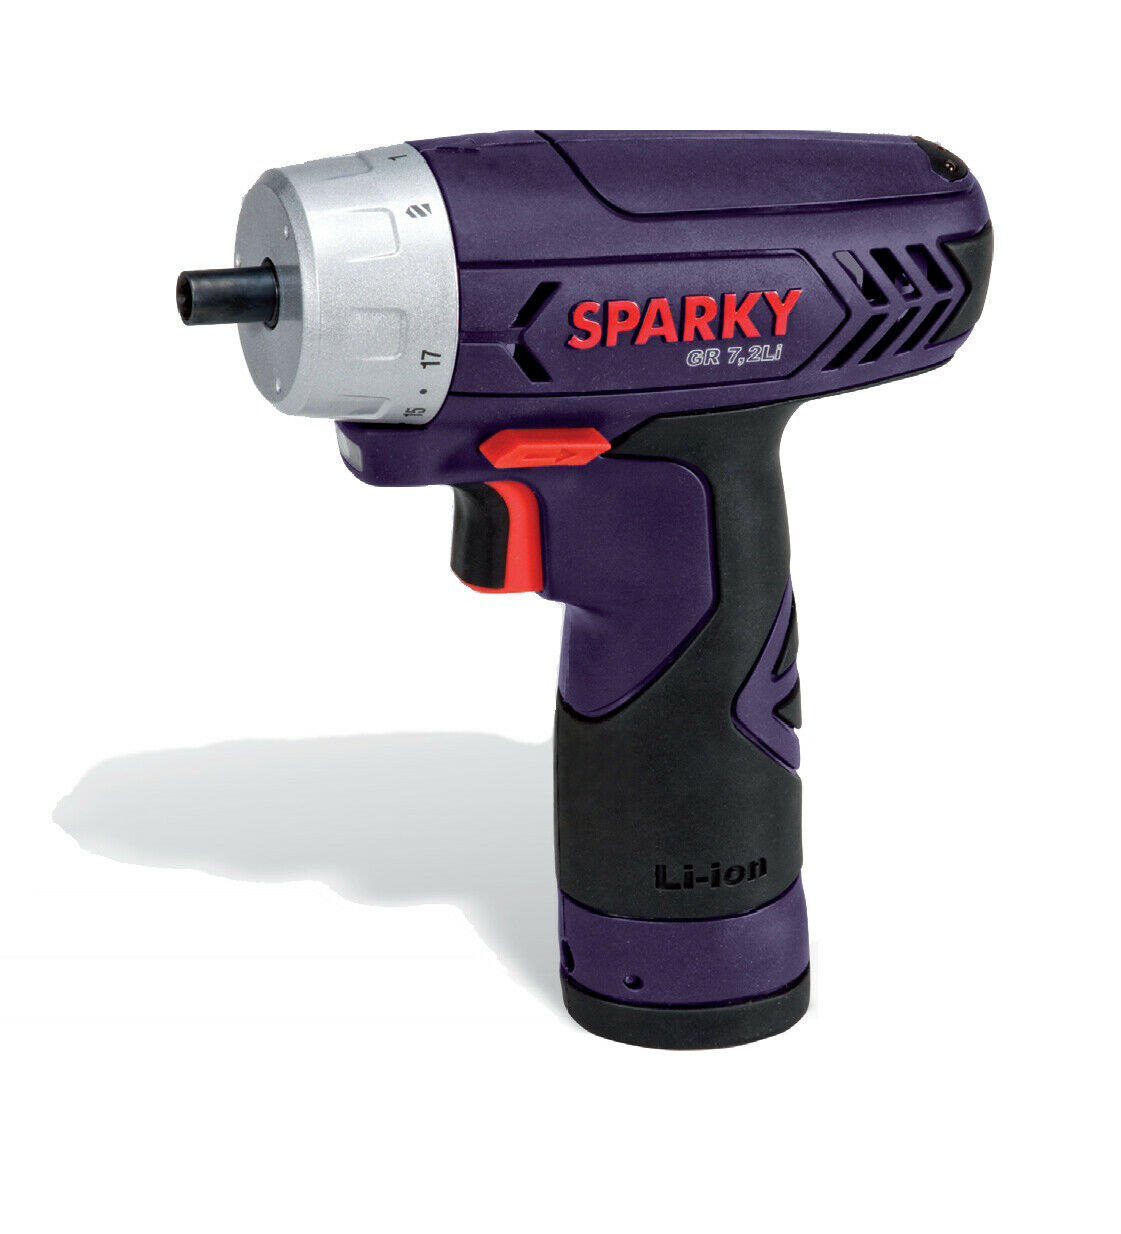 Sparky Professional GR 7.2 Li Cordless Screwdriver 11W19